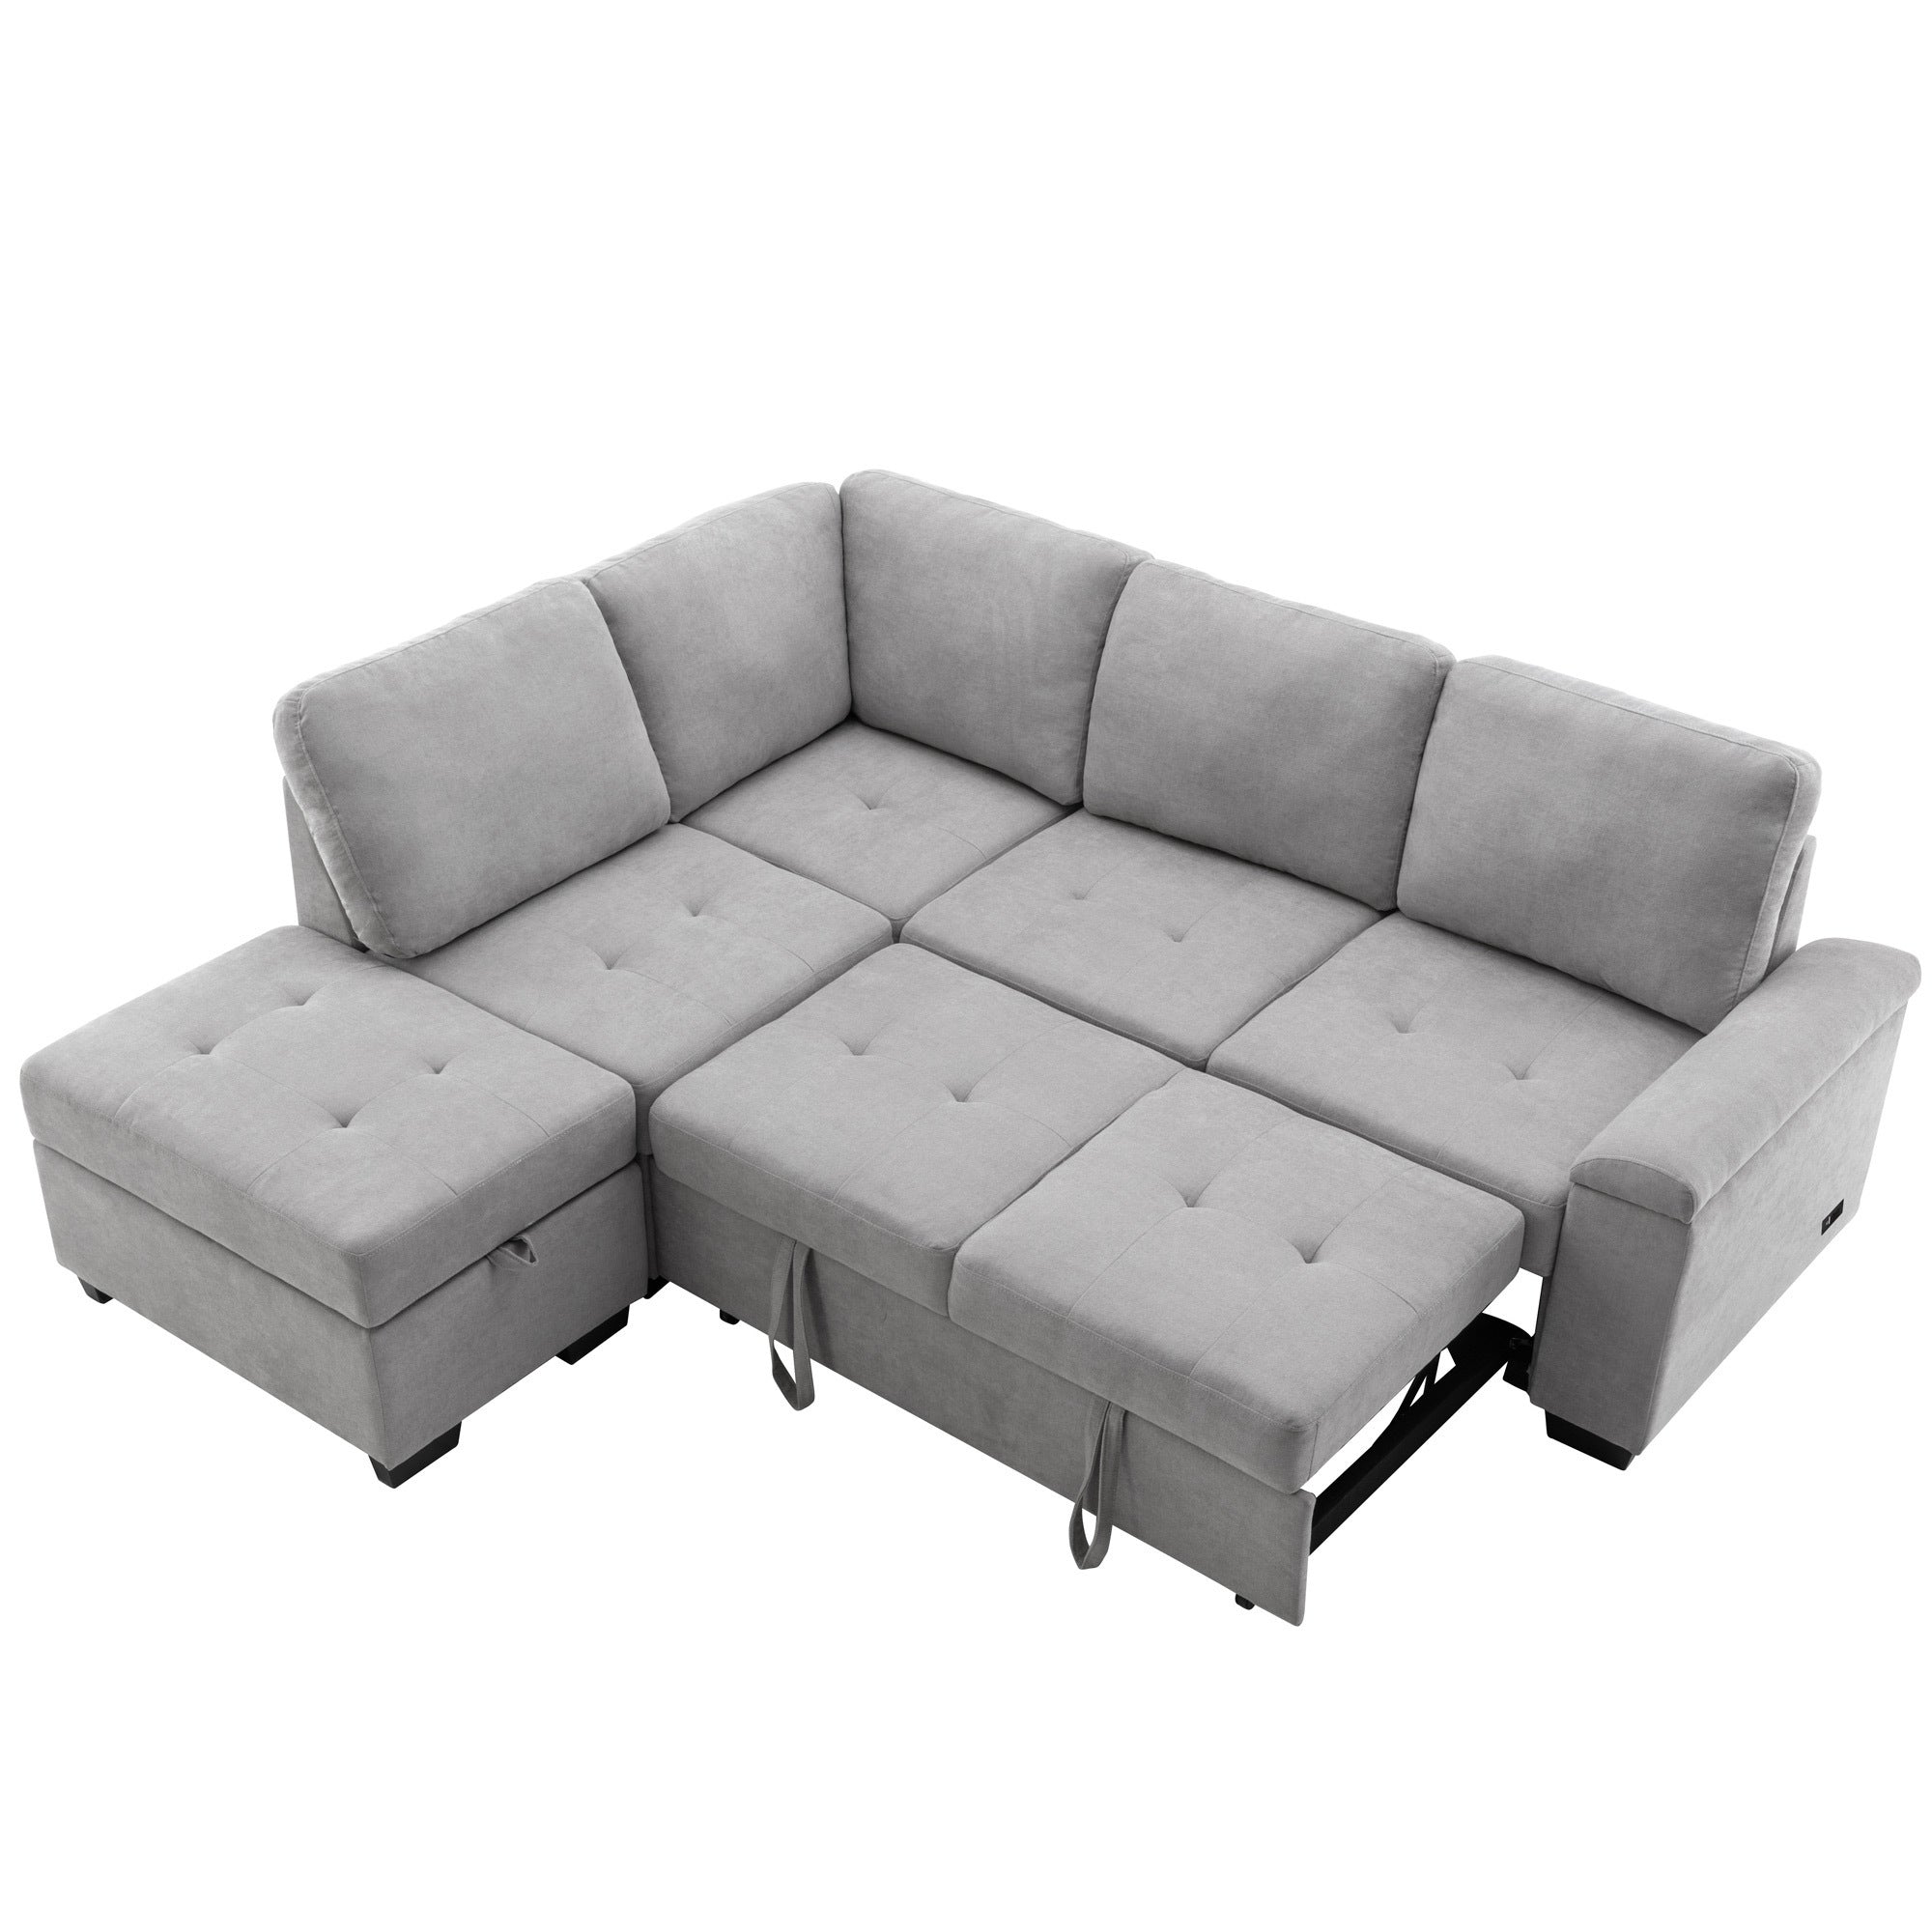 Gray L Shaped Sleeper Sectional Sofa - Super Comfy